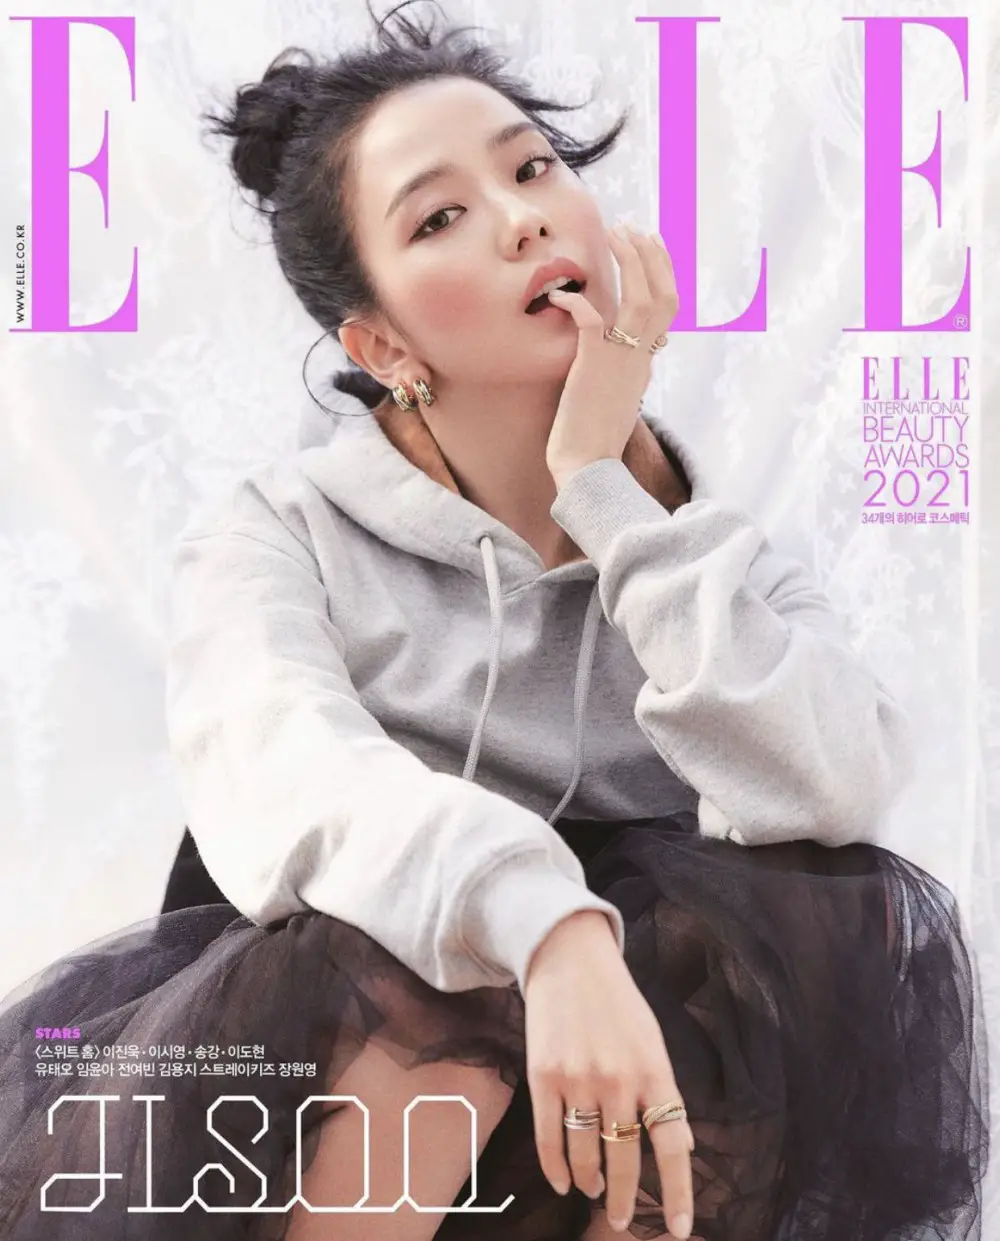 BLACKPINK's Jisoo on the cover of ELLE Korea | KProfiles Forum - KPop ...